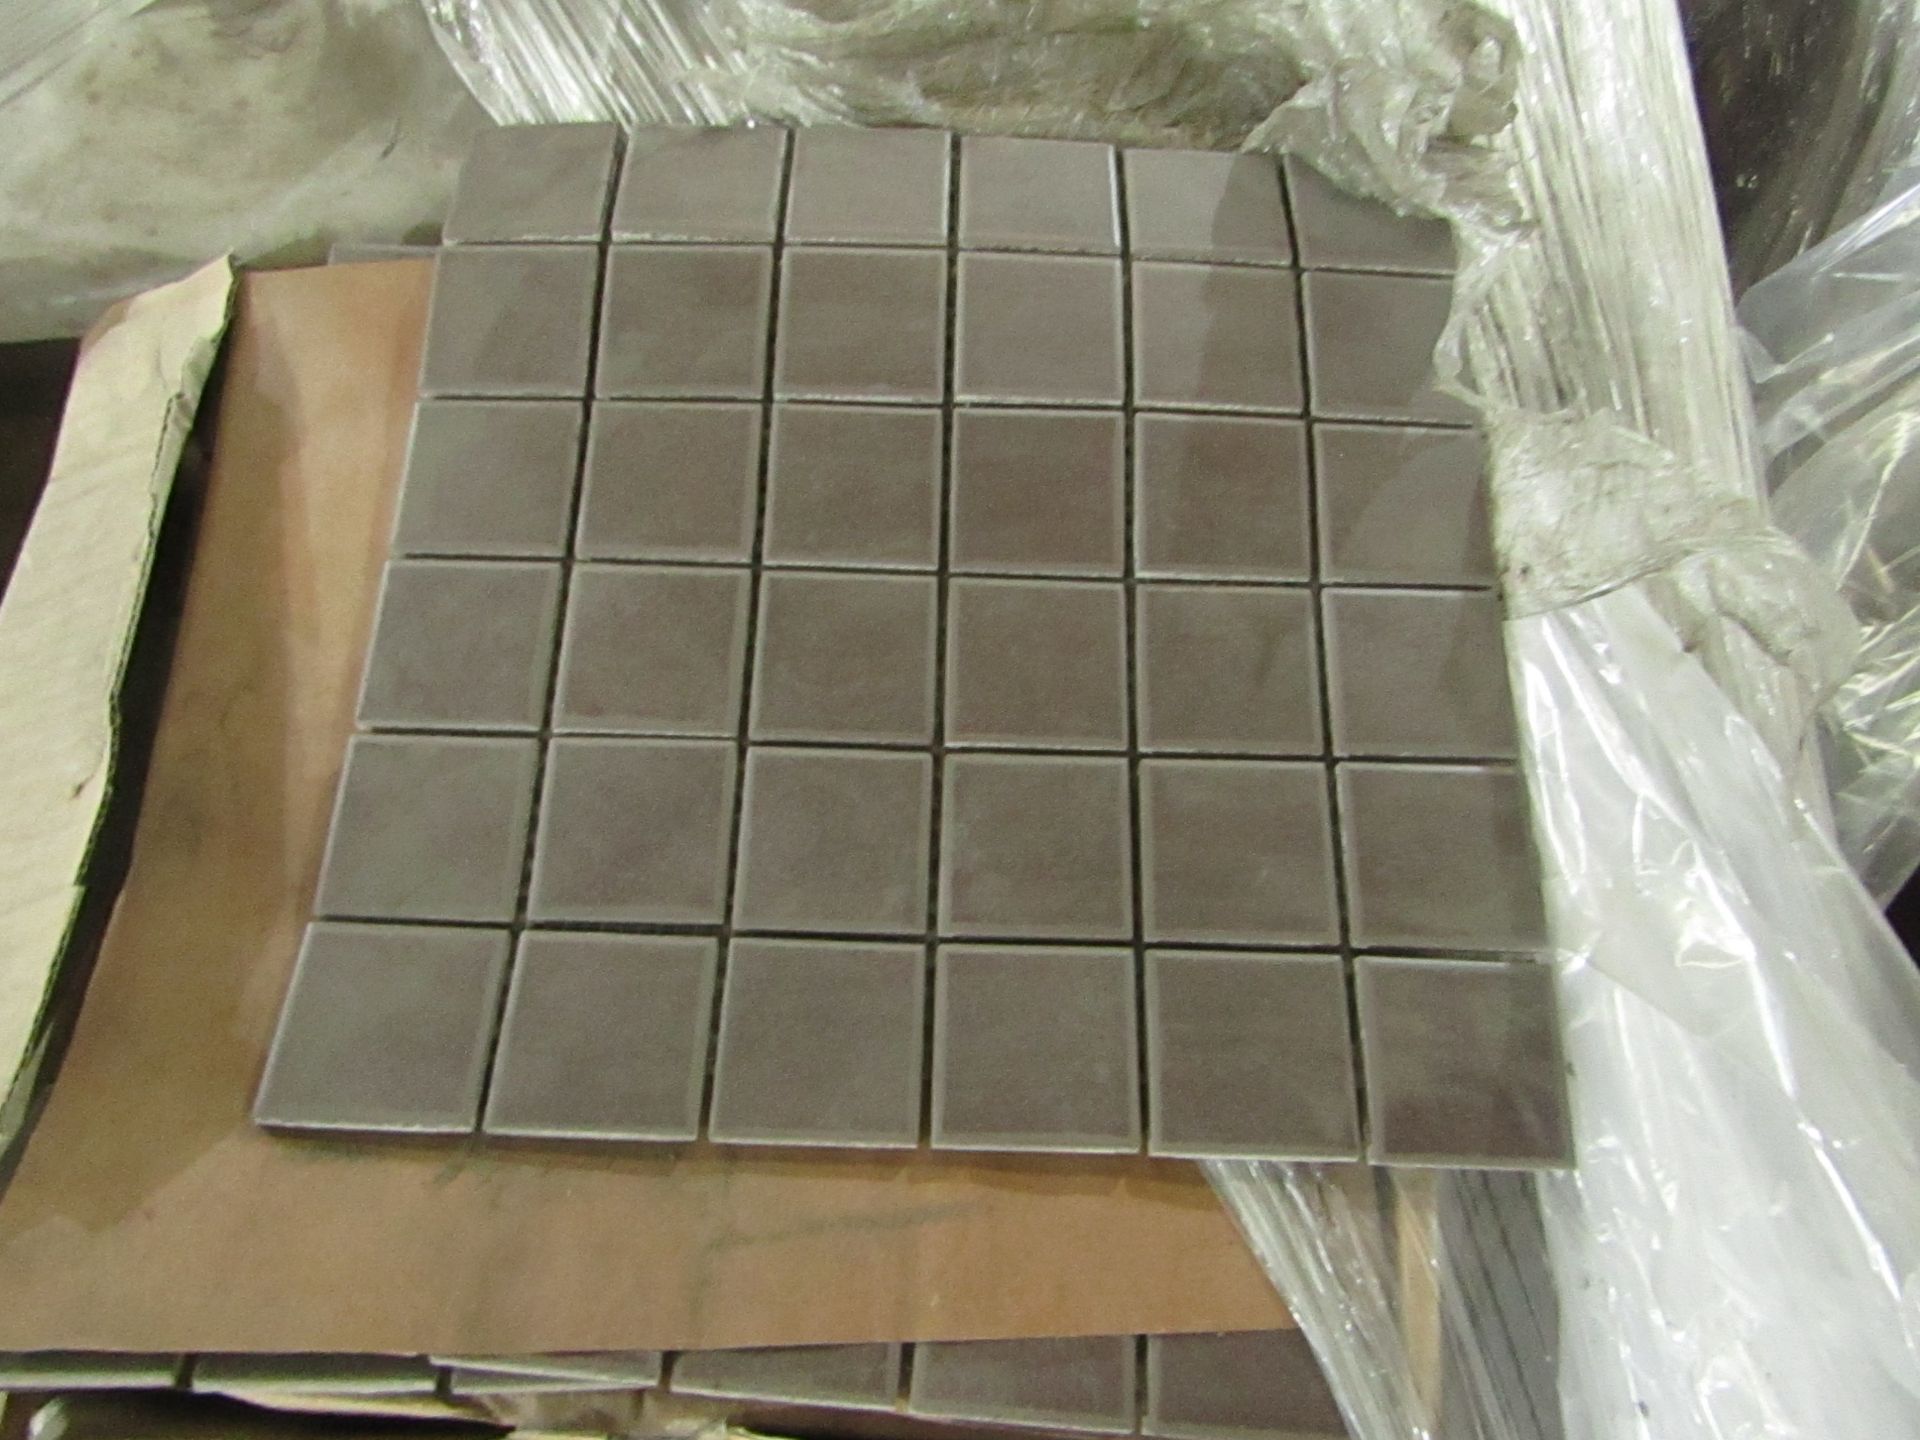 10x Boxes of 12 Vitra Sahara Mocha Mosaic 470x470mm tiles, brand new. Total RRP £34.99 per box,